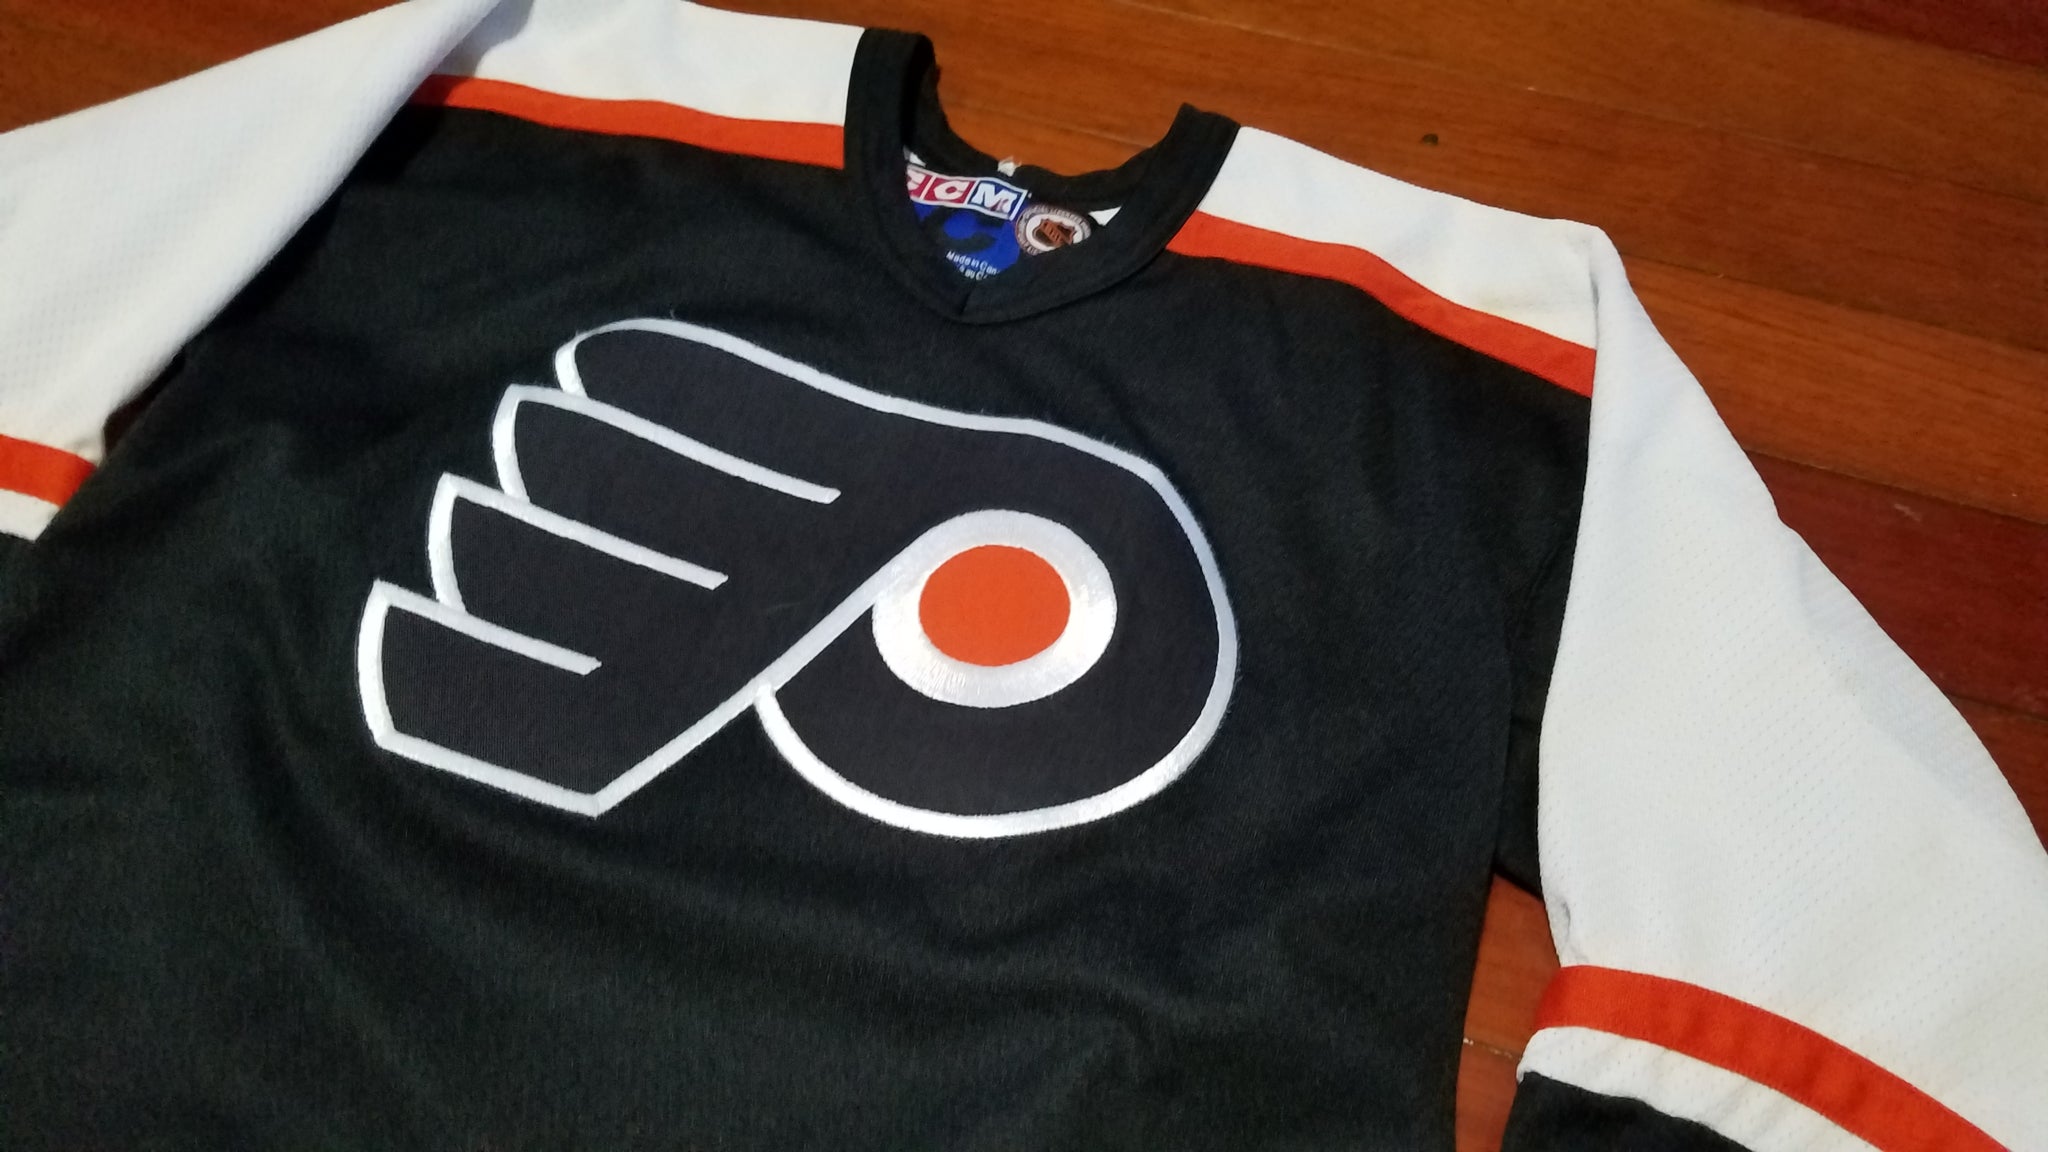 philly hockey jersey